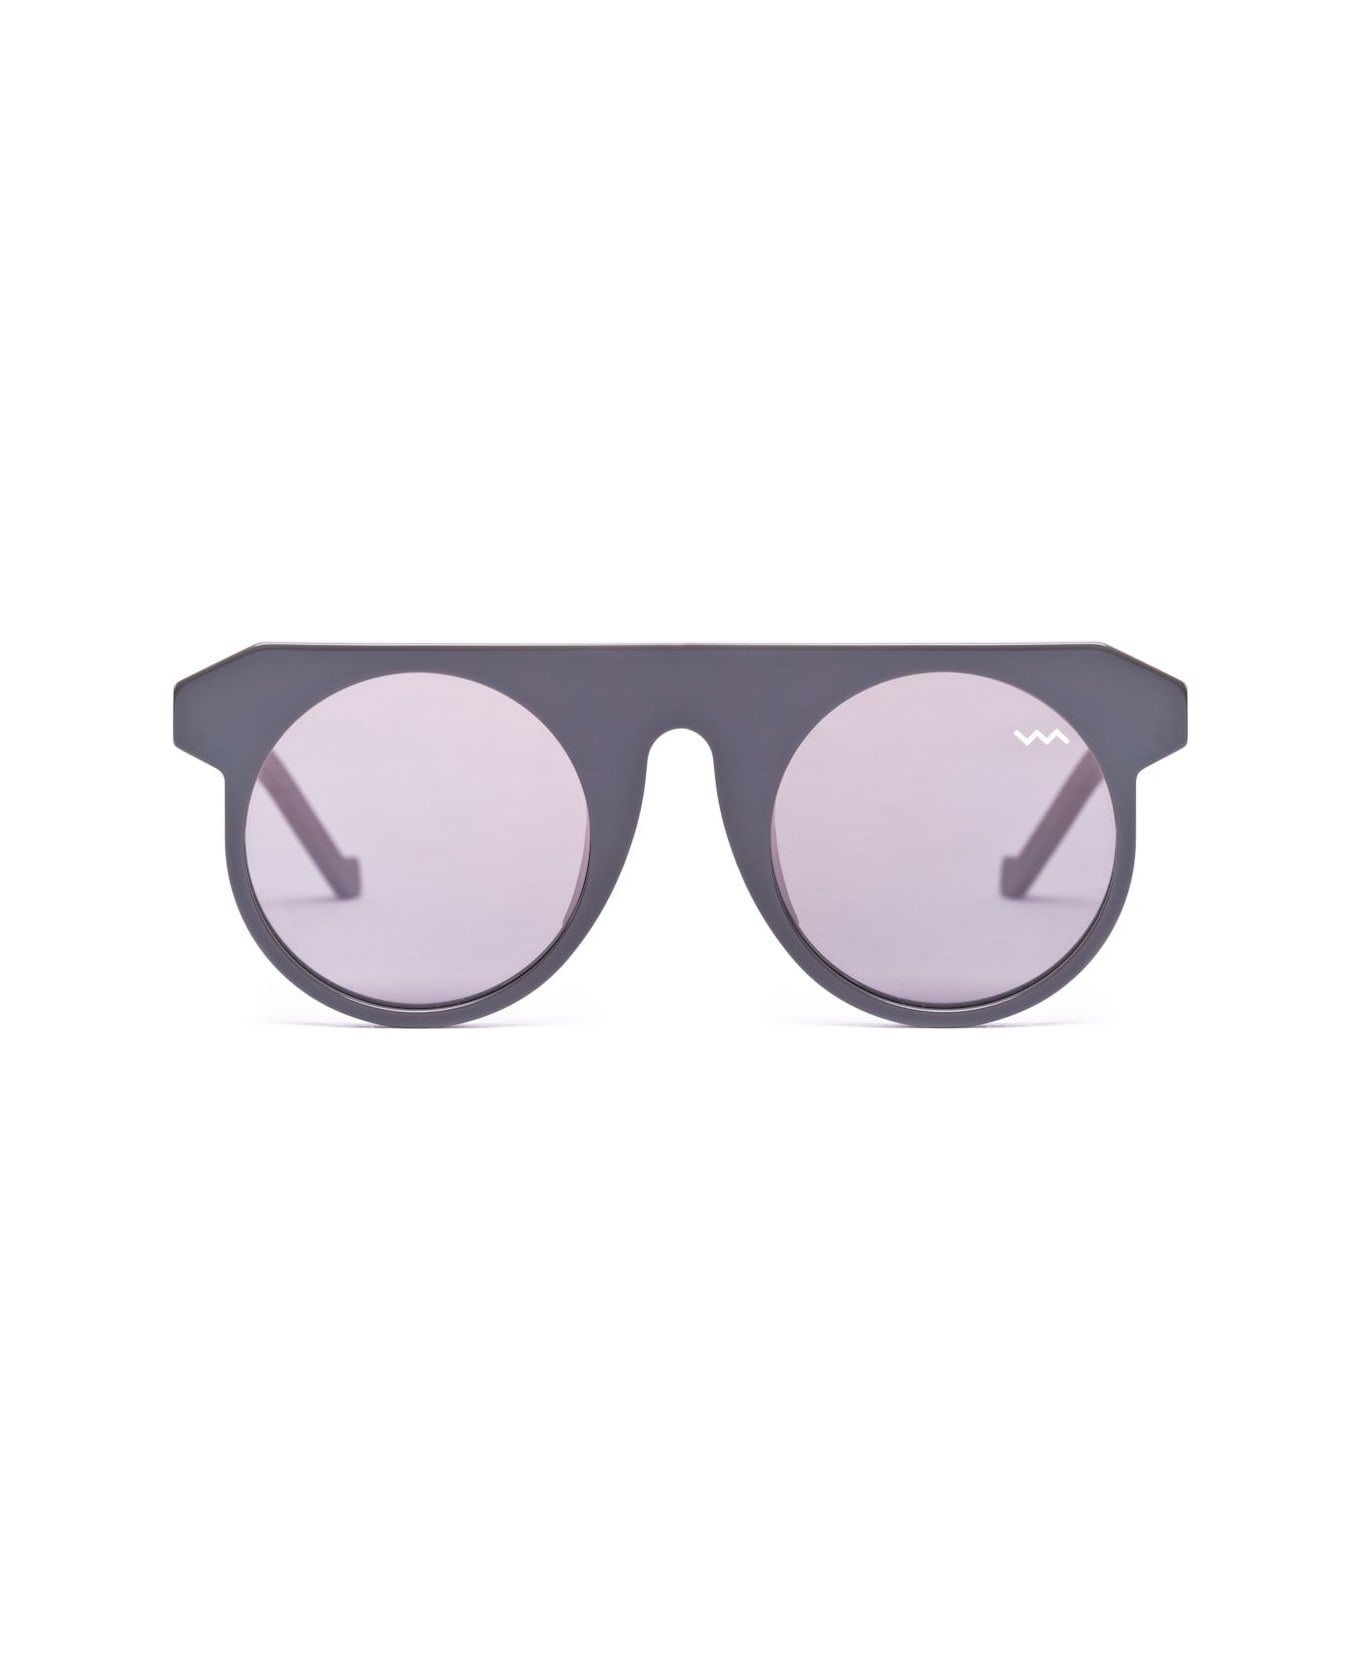 VAVA Bl0006-dark Grey Sunglasses - dark gray サングラス